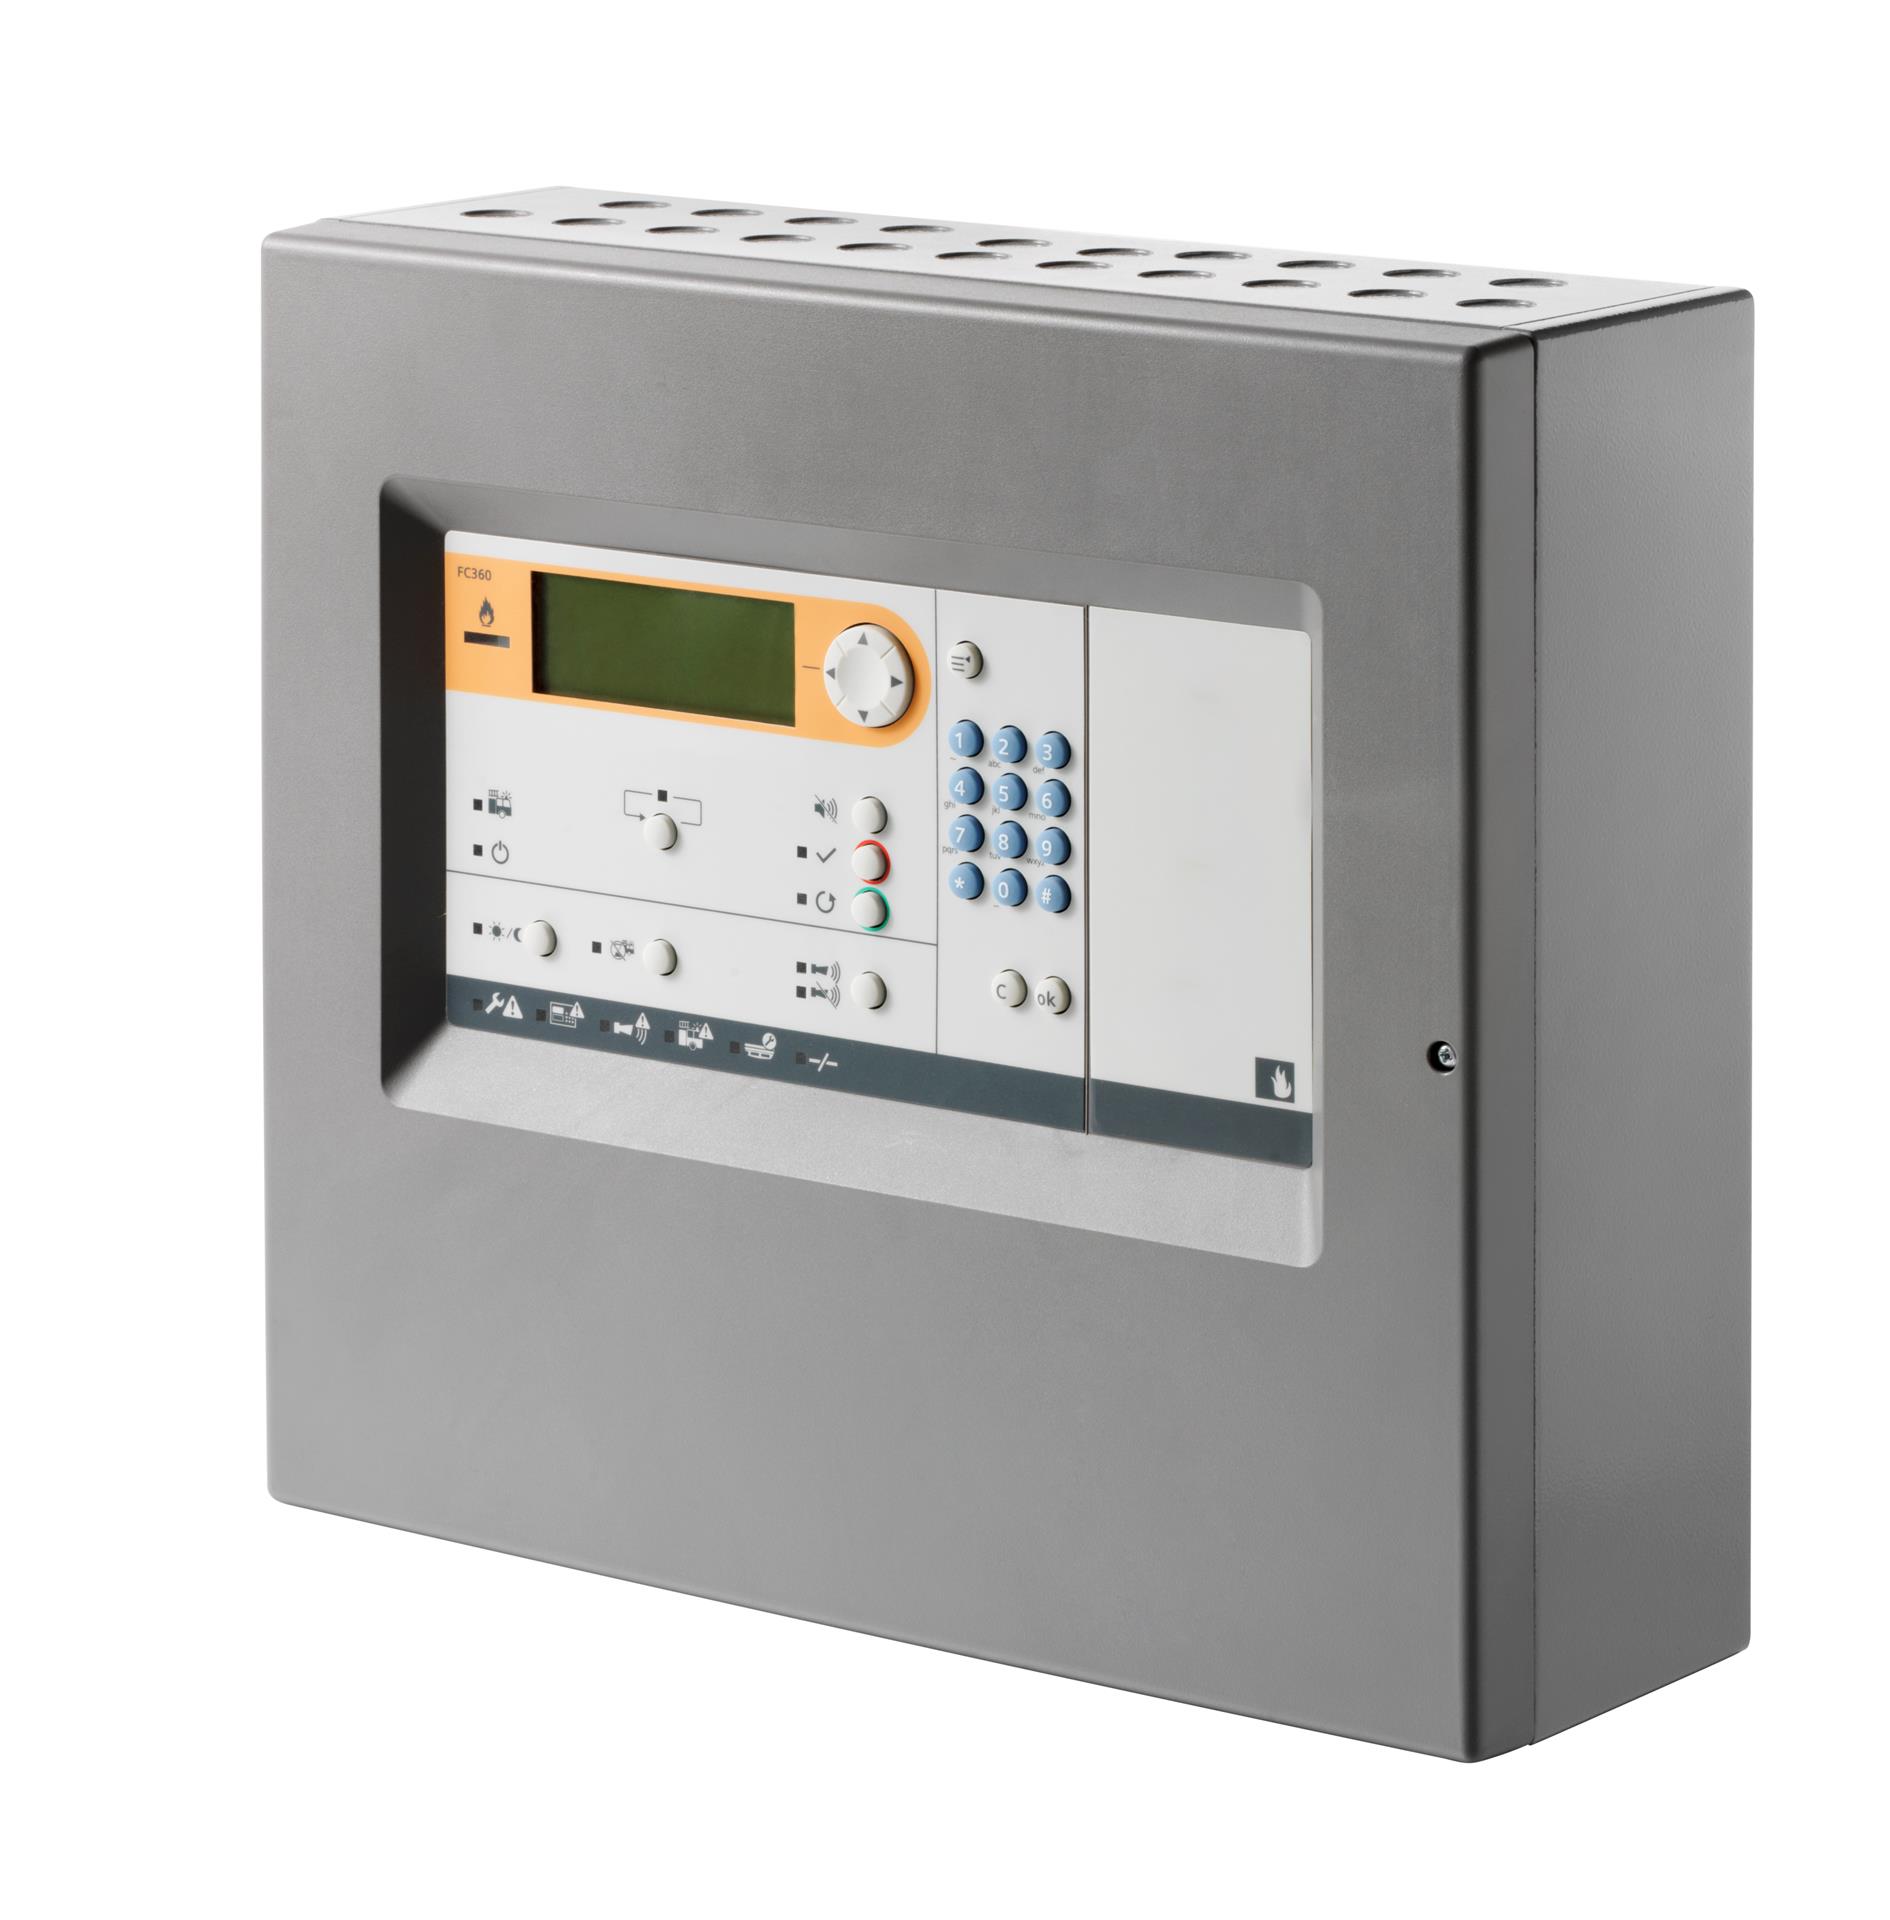 SIEMENS FC361-ZA Cerberus FIT Interactive Fire Detection and Alarm Control Panel – Comfort Safe (1 loop, 126 addresses)